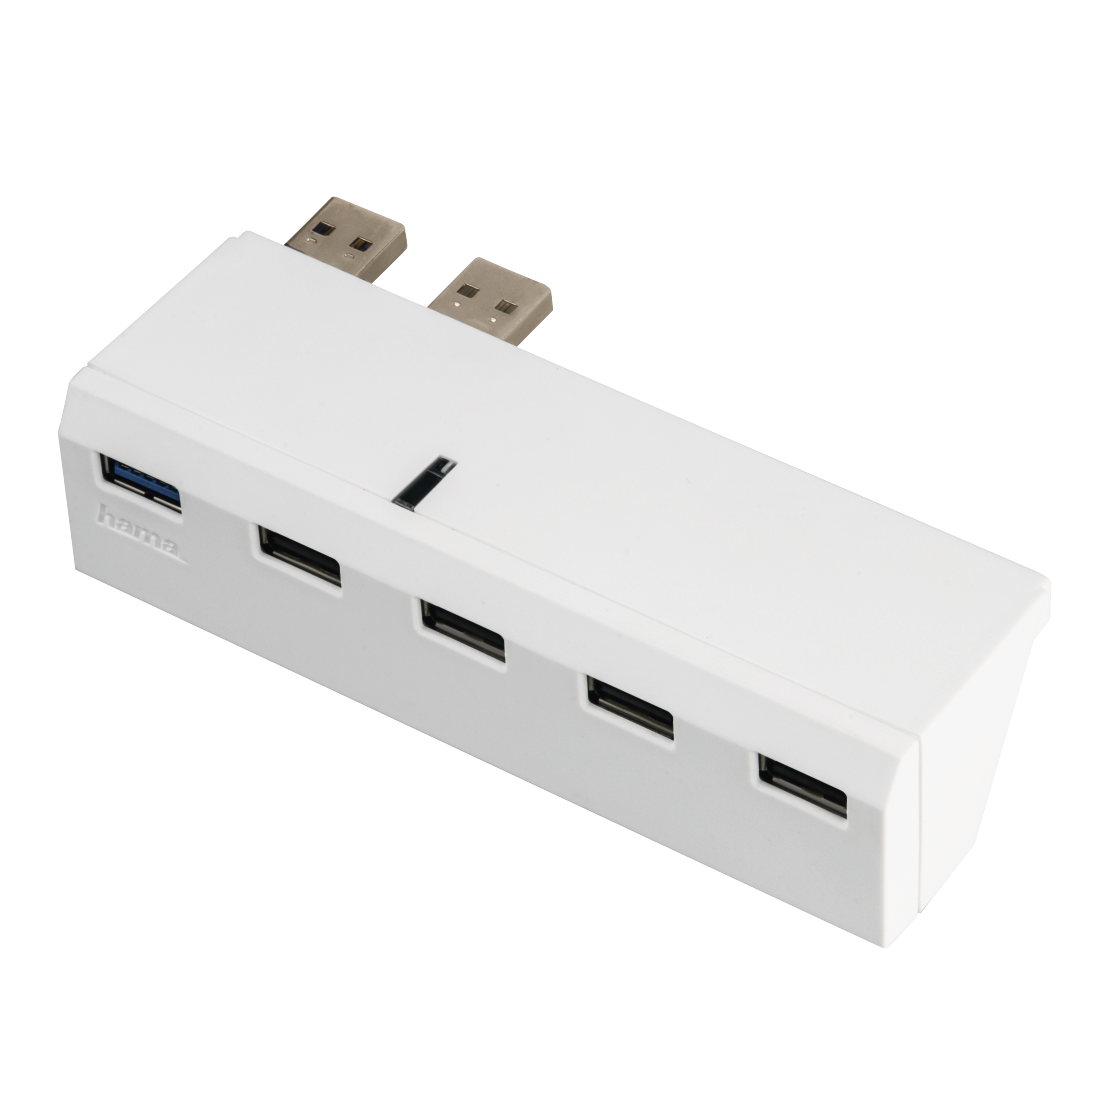 00115446 Hama USB Hub for PS4, 5 ports, white